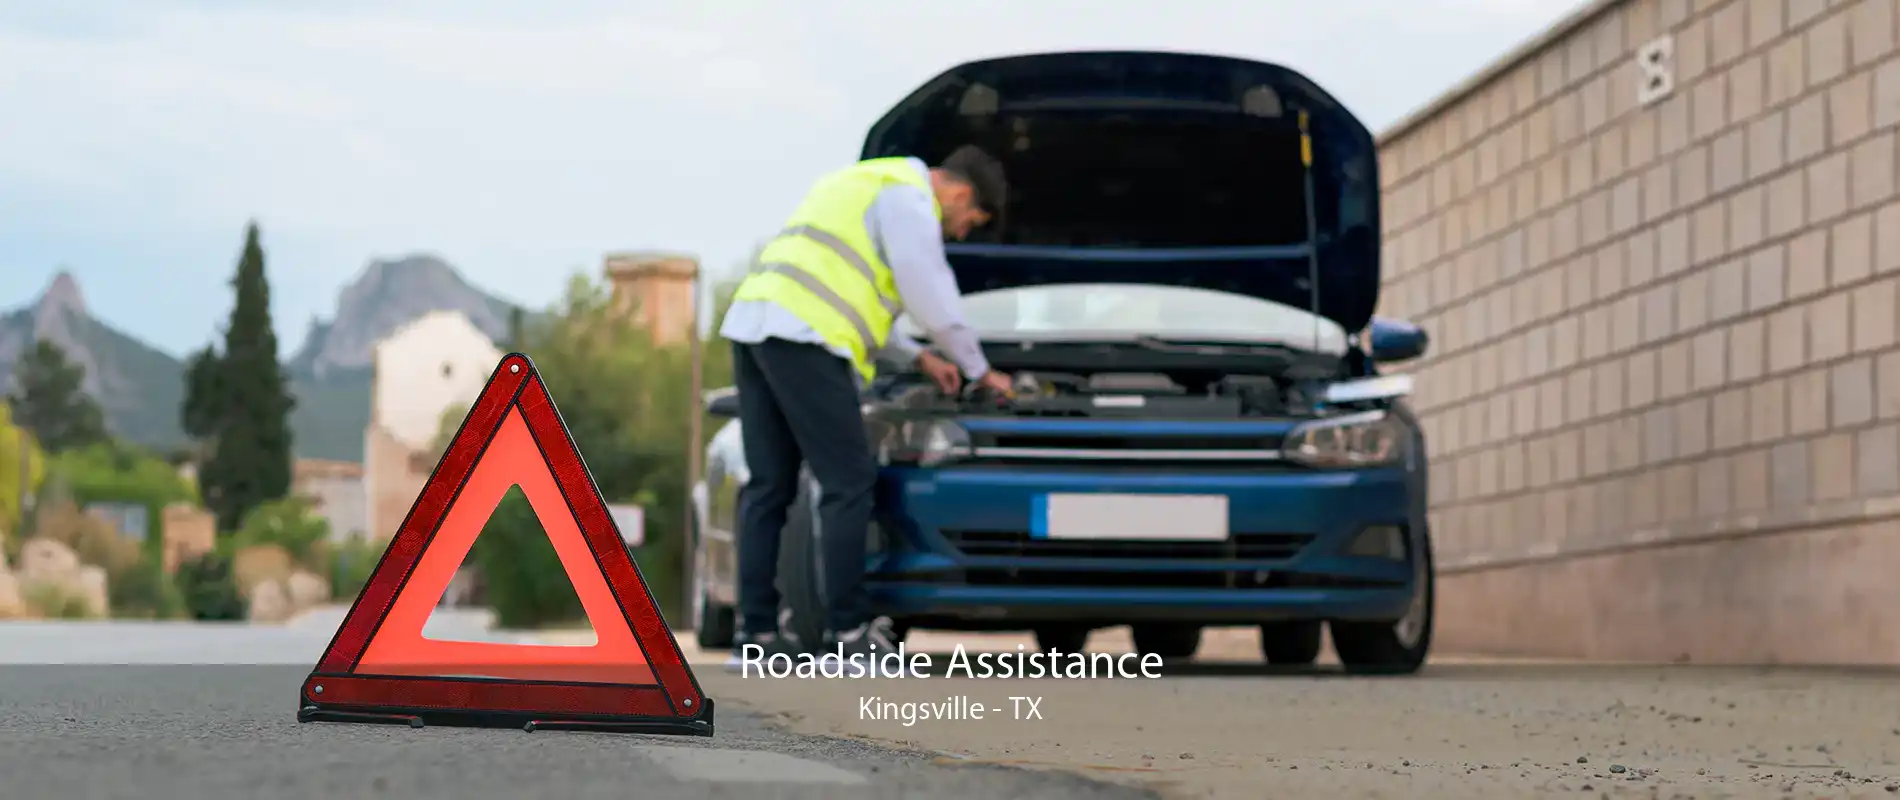 Roadside Assistance Kingsville - TX